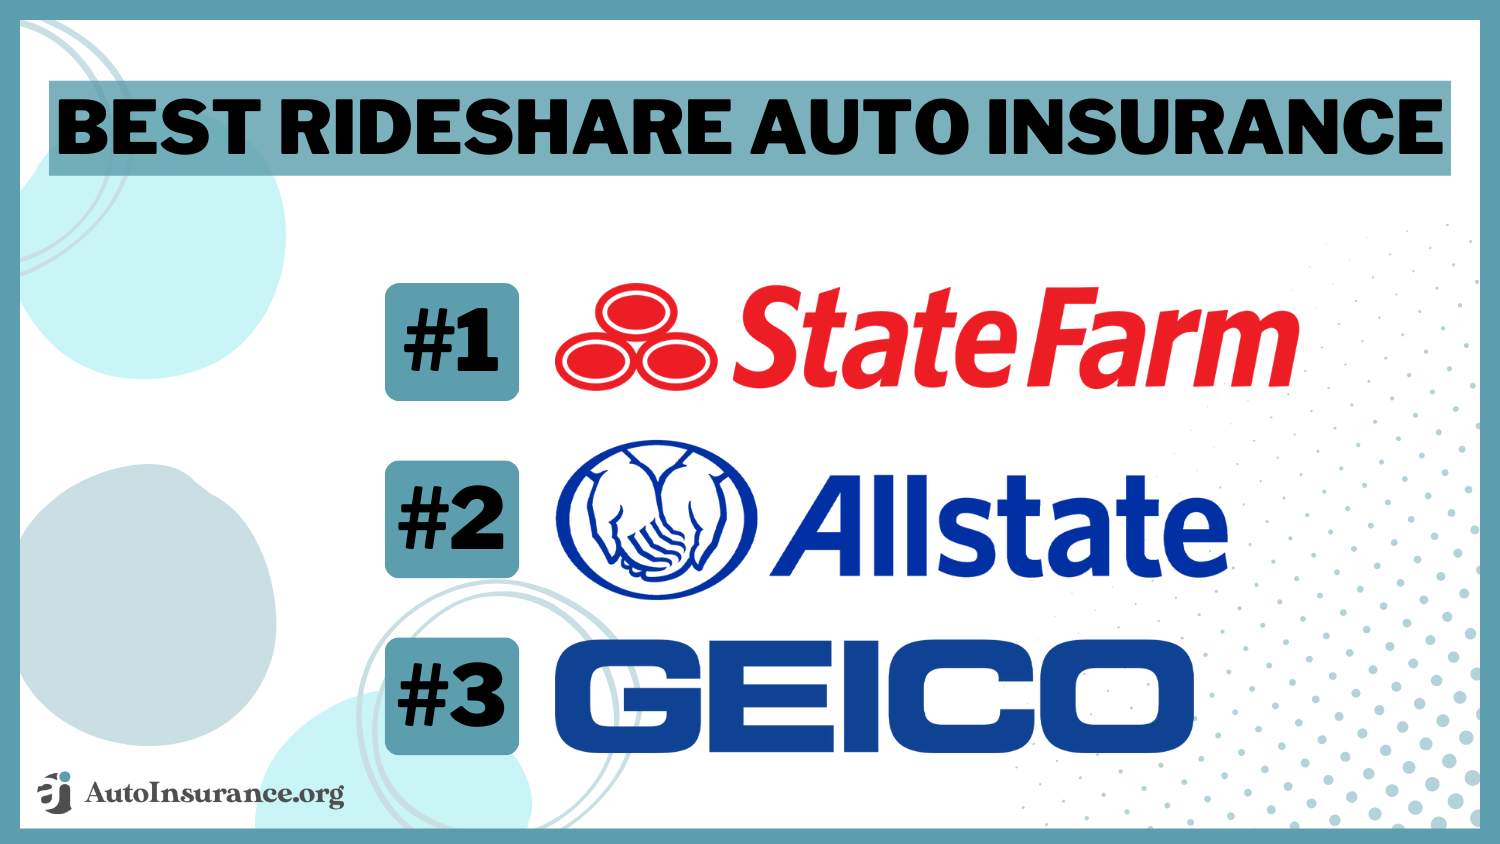 state farm Allstate Geico Best Rideshare Auto Insurance